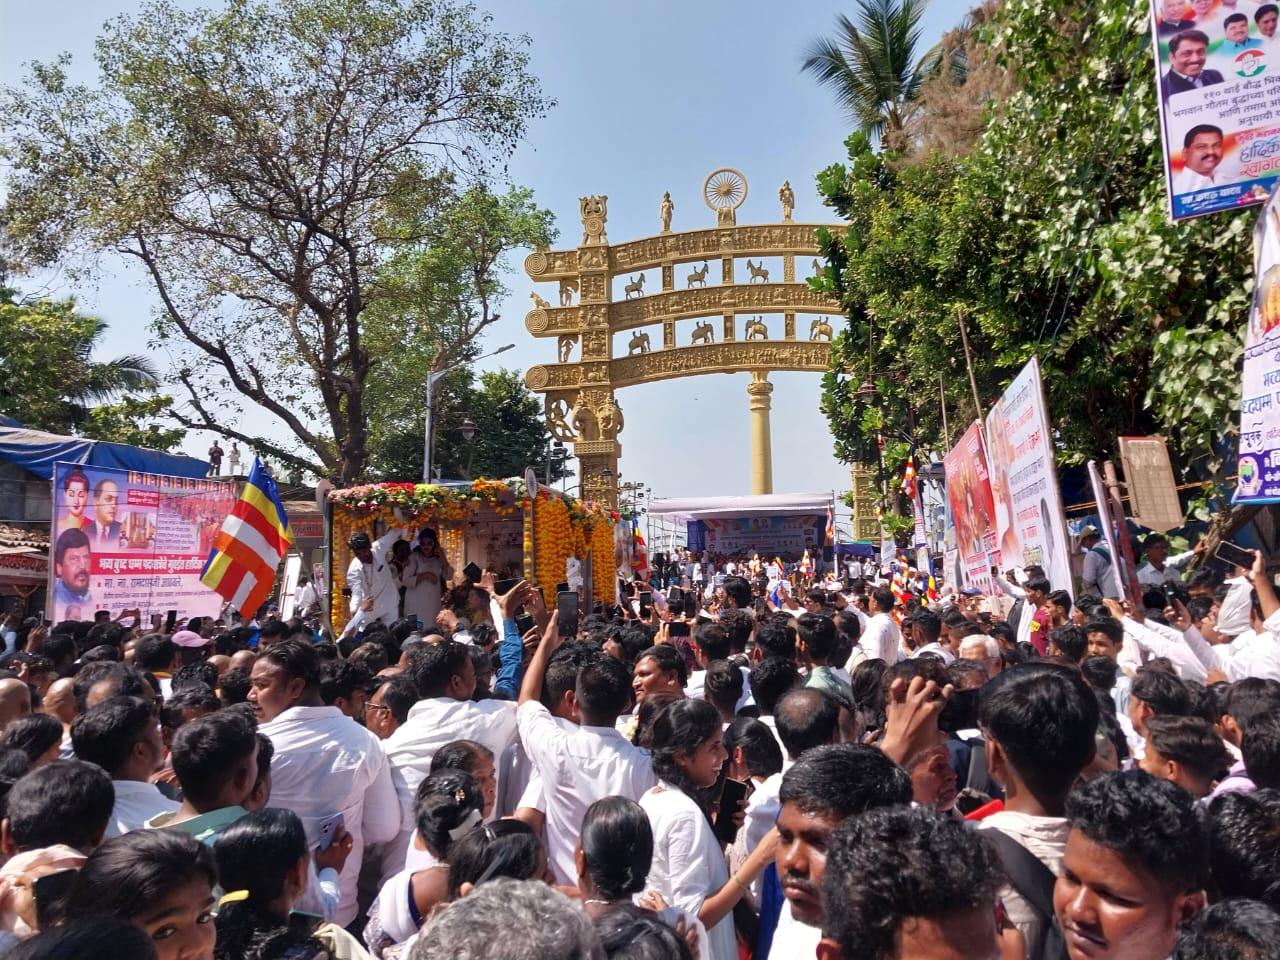 The 'Grand Dhamma Walk' travelled from Parbhani via Jalna, Aurangabad, Nashik, Thane, to reach Dadar in Mumbai on Wednesday